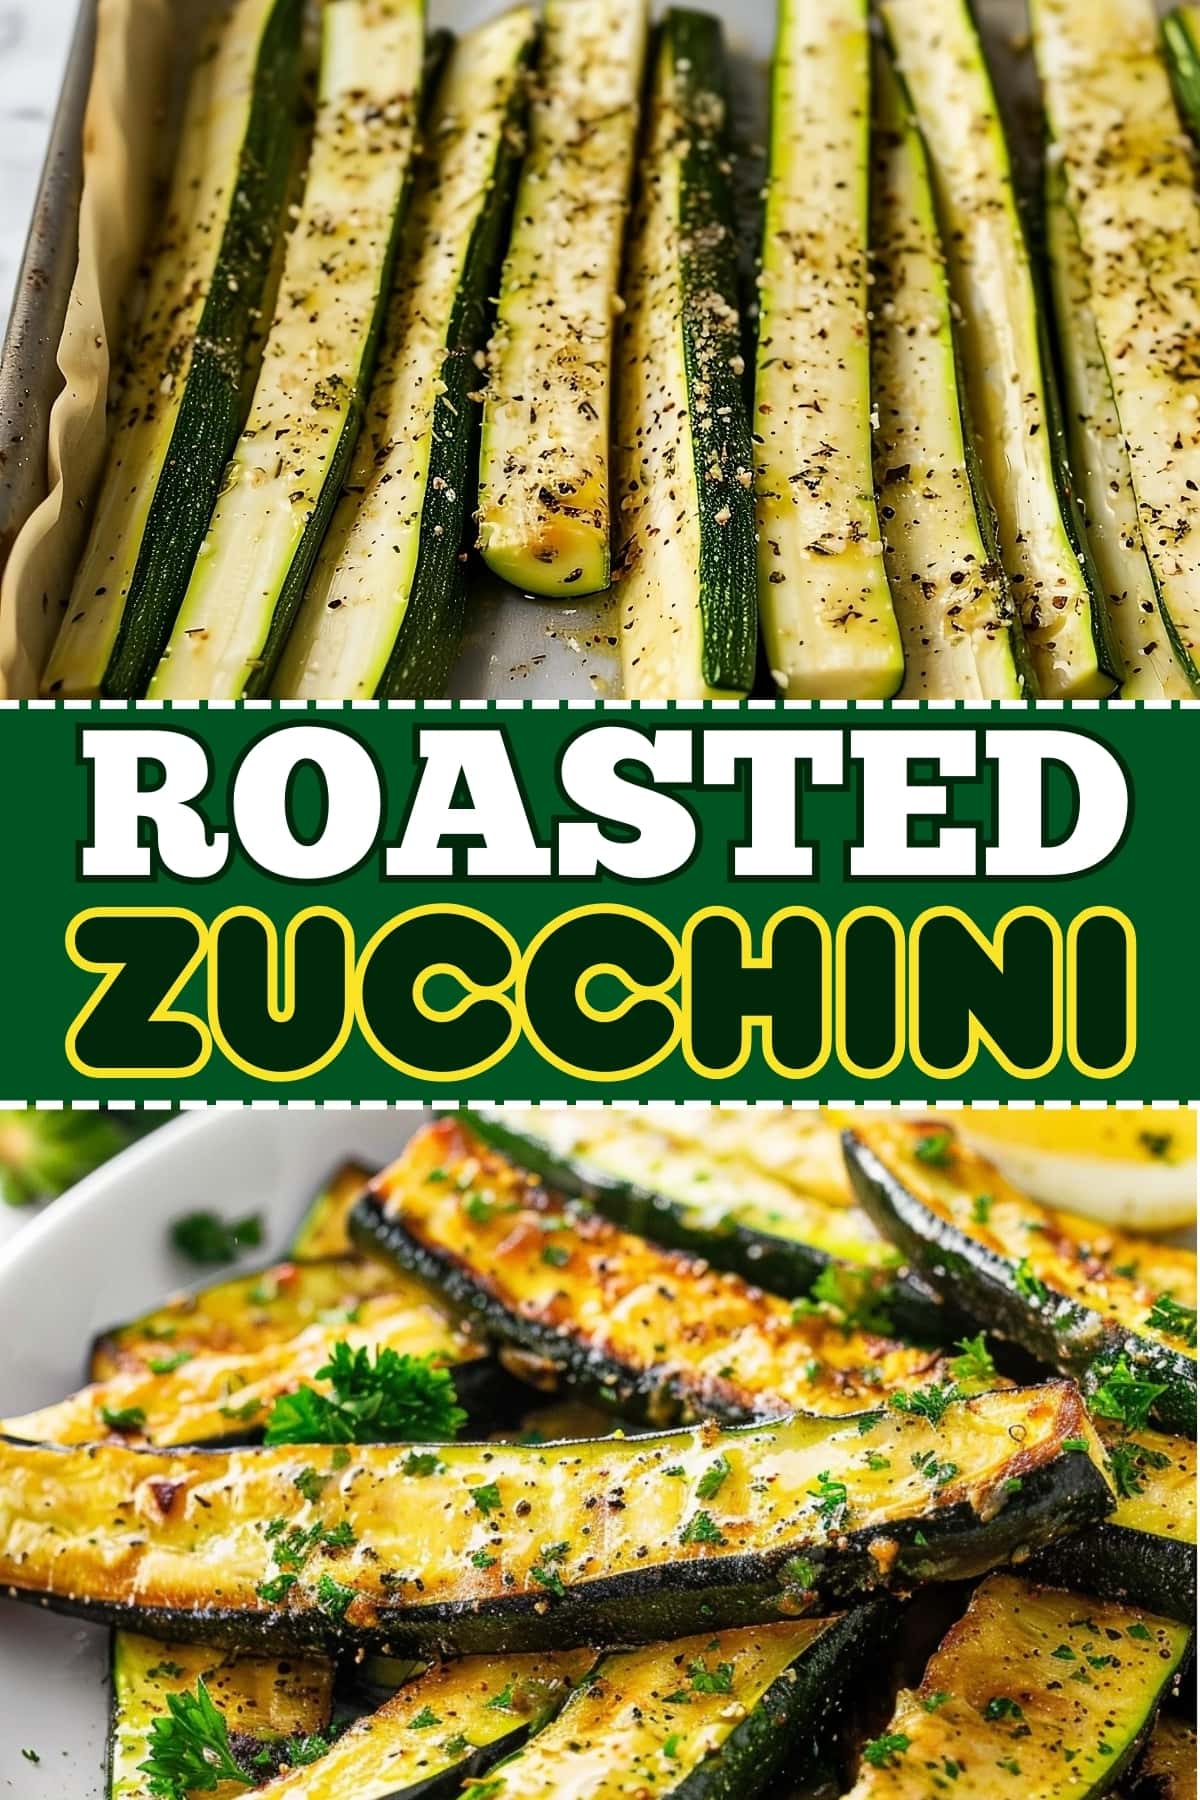 Roasted zucchini.